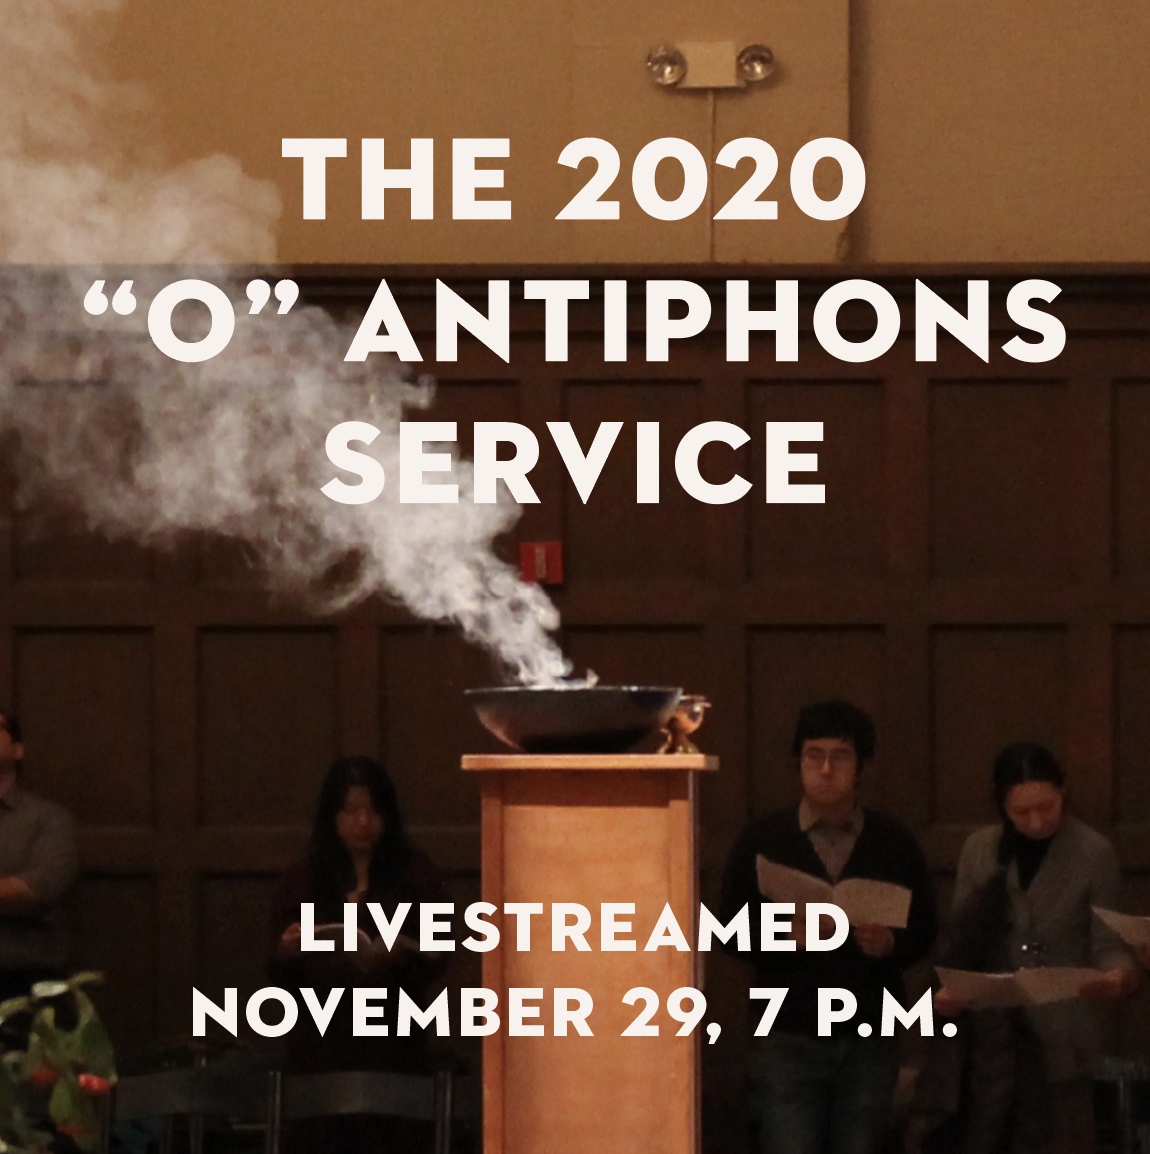 The 2020 “O” Antiphons Serivce